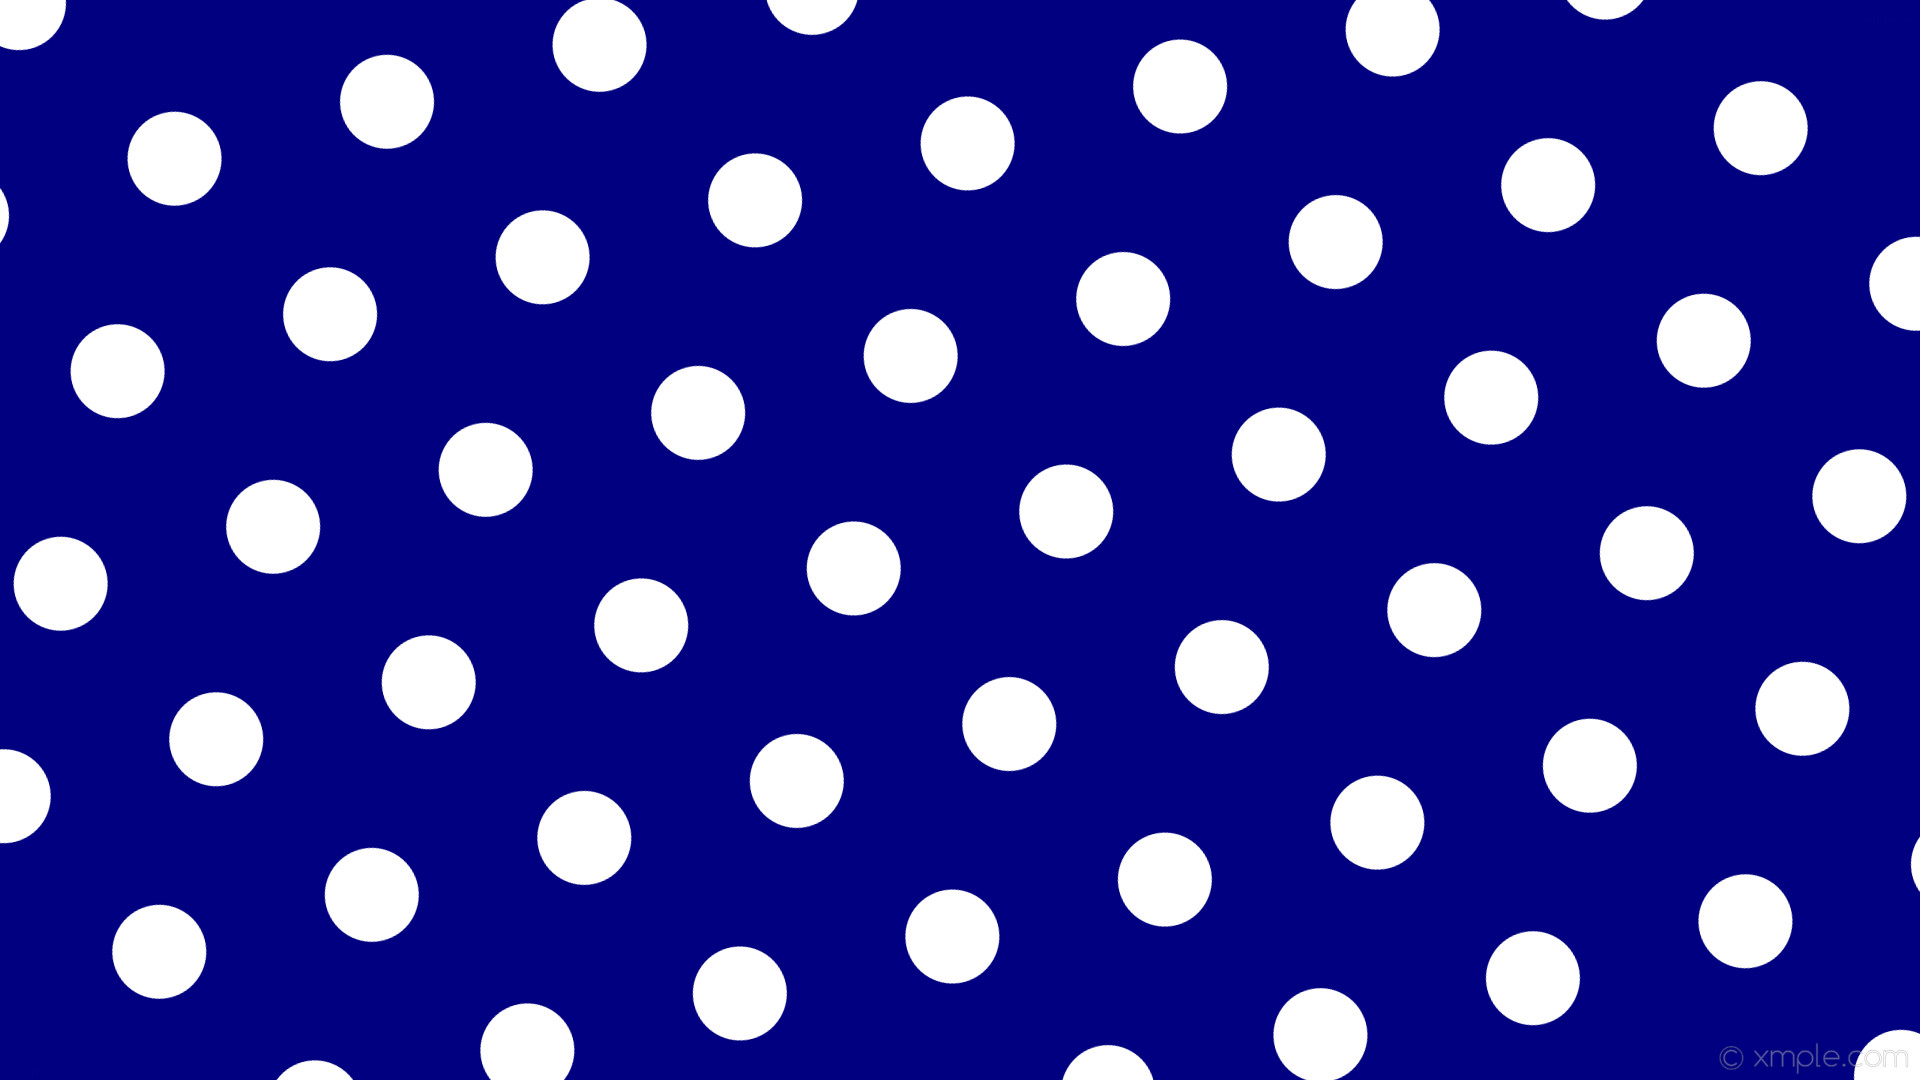 1920x1080 wallpaper white blue dots polka hexagon navy #000080 #ffffff diagonal 15Â°  94px 220px